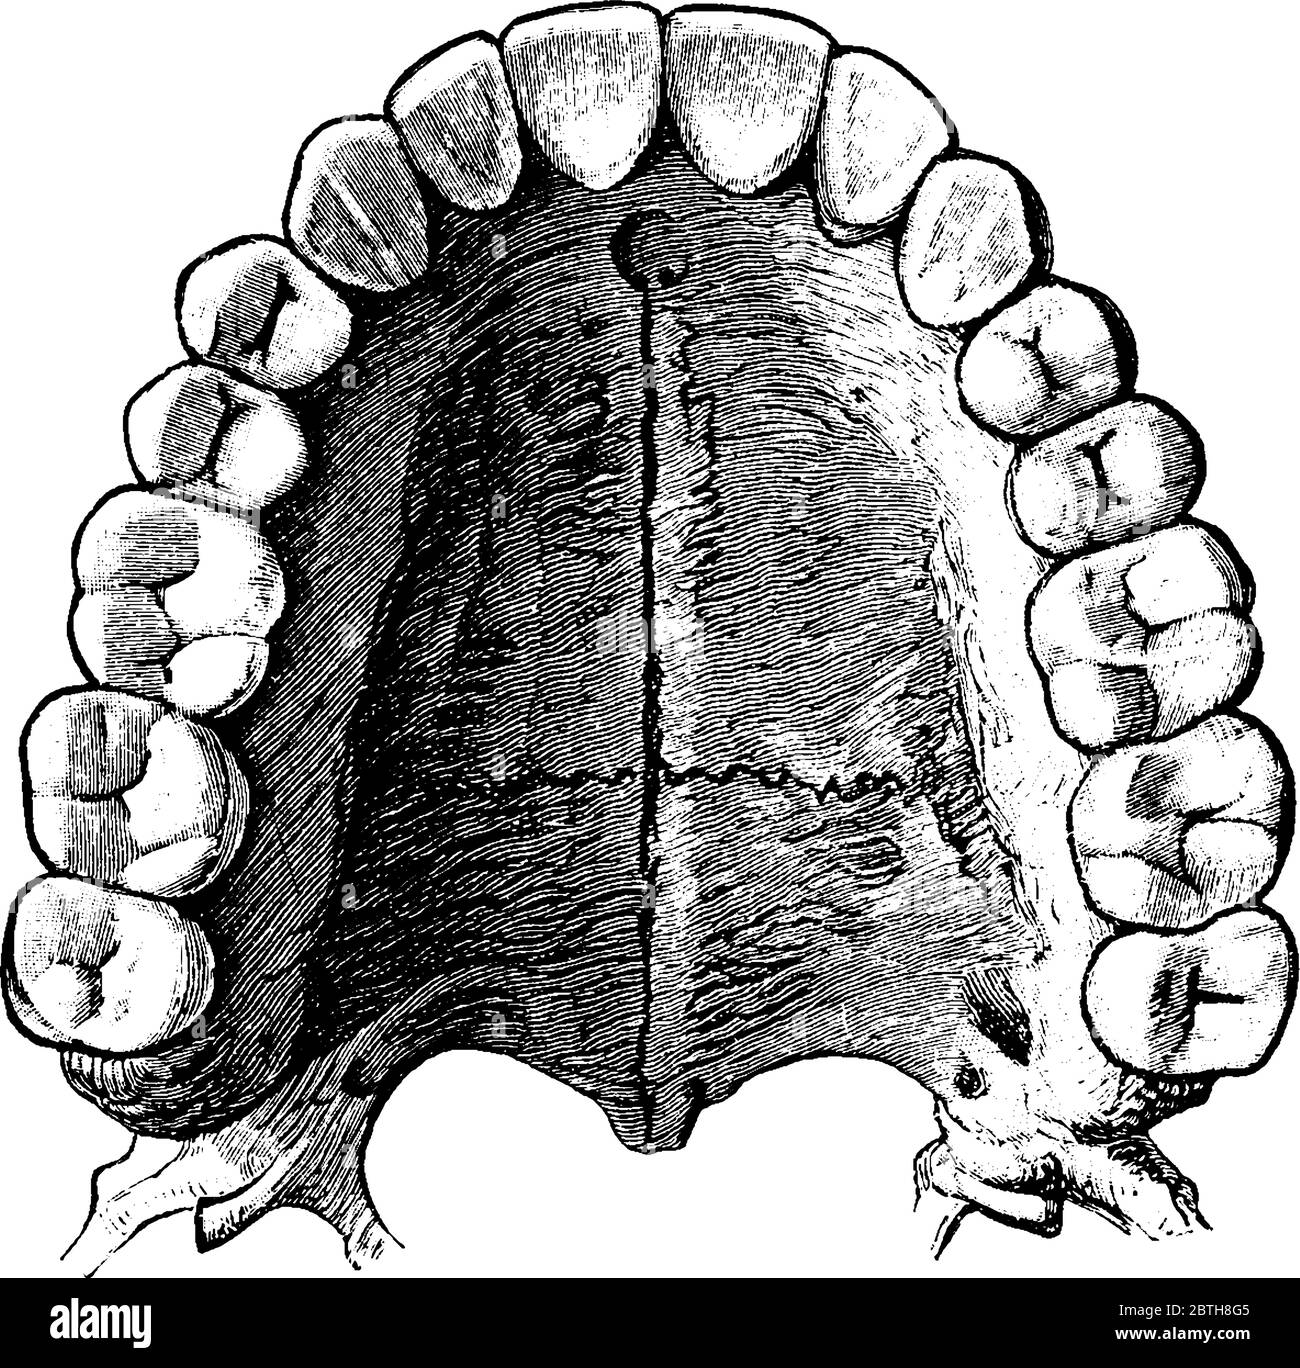 Ковид зубова. Анатомия твердого неба верхней челюсти. Челюсть вид сбоку анатомия зубы. Зубной ряд верхней челюсти. Зубной слепок верхней челюсти снизу.